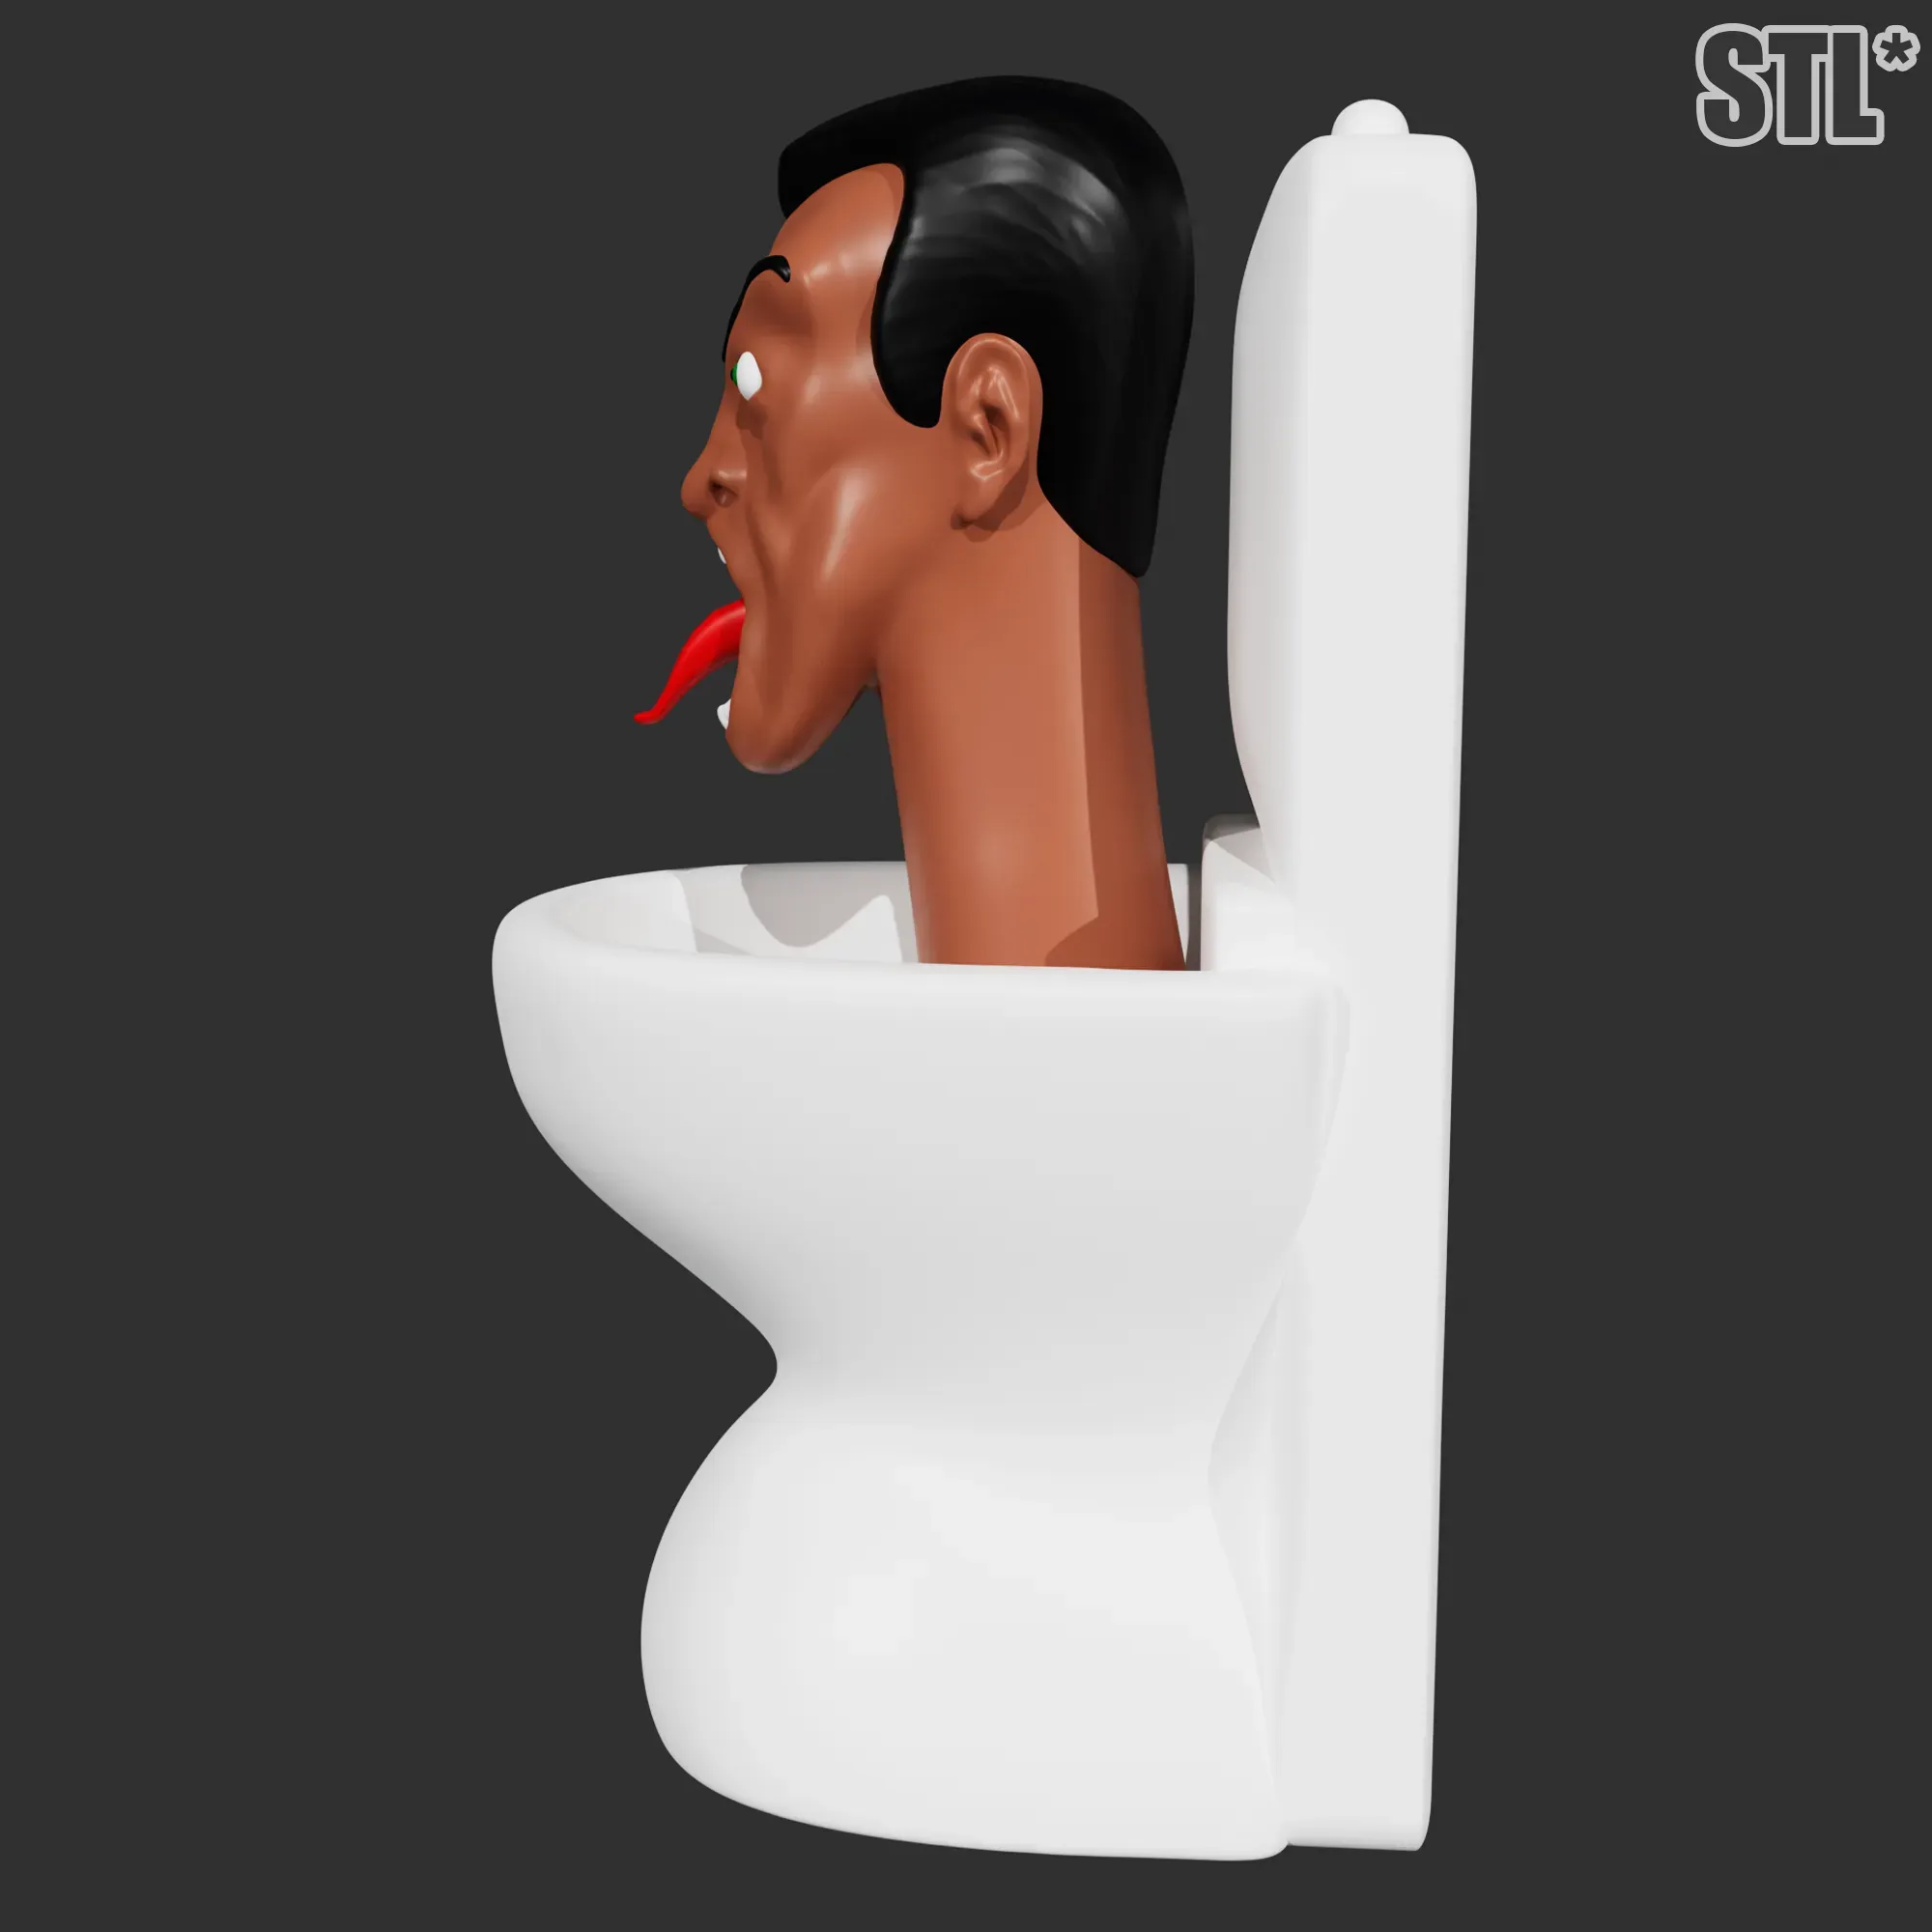 G Man Skibidi Toilet SVG,G Man Skibidi Toilet PNG,G Man Skib - Inspire  Uplift